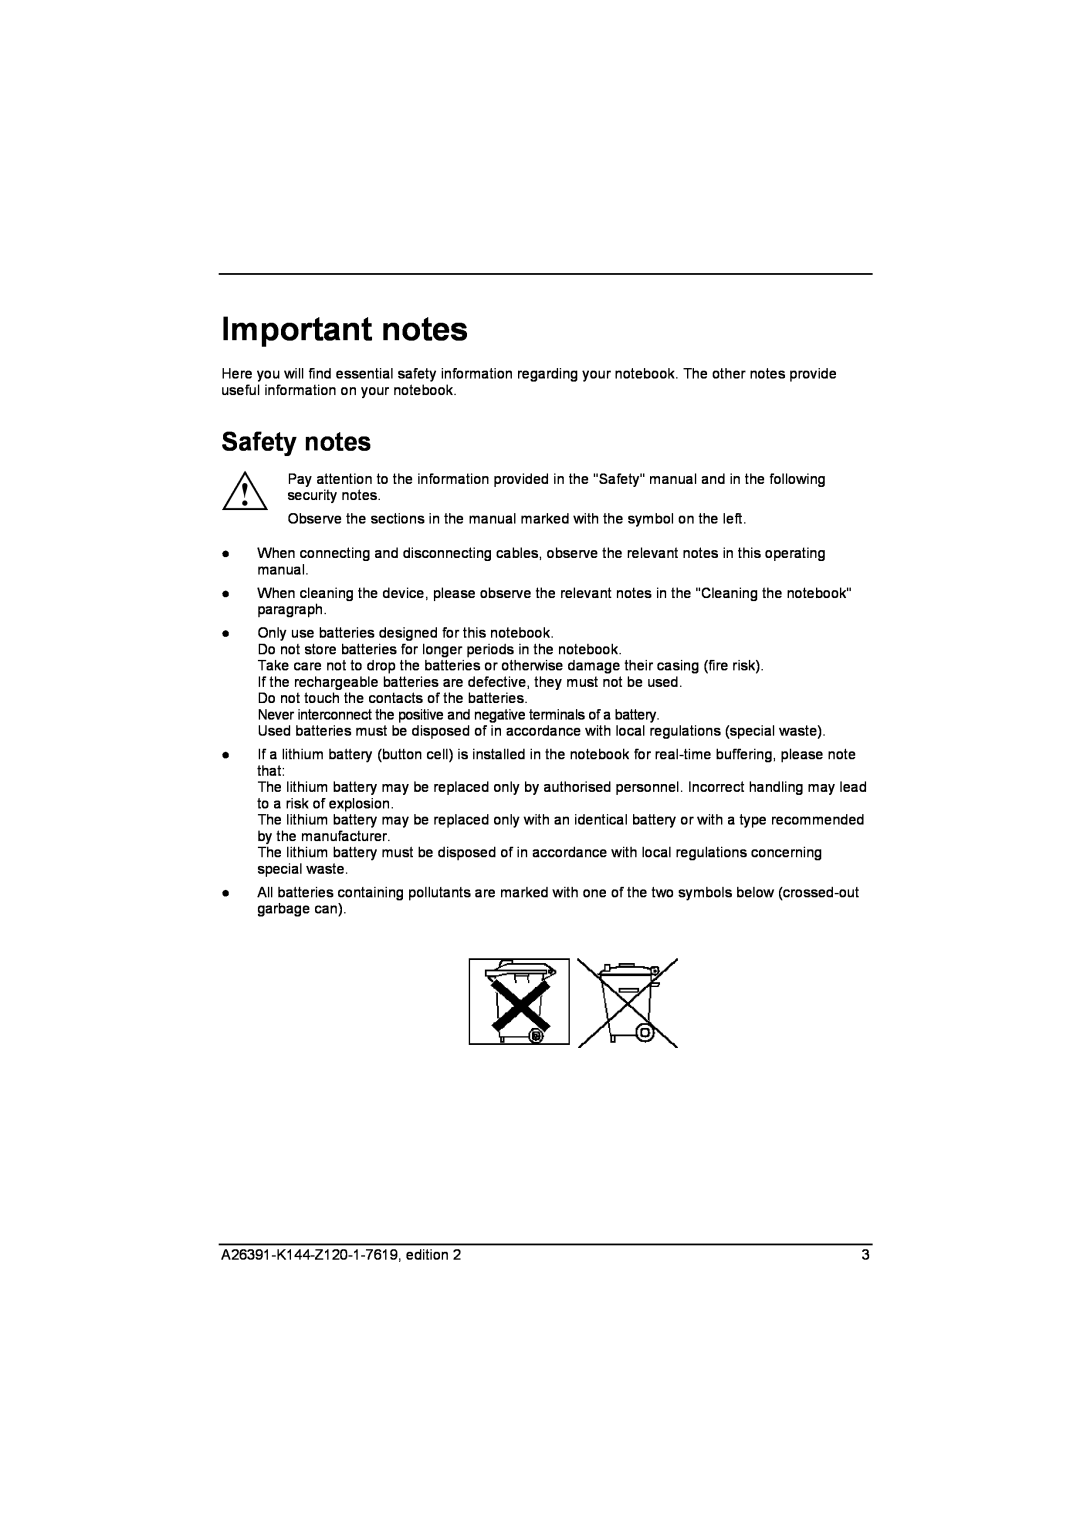 Fujitsu S SERIES manual Important notes, Safety notes 